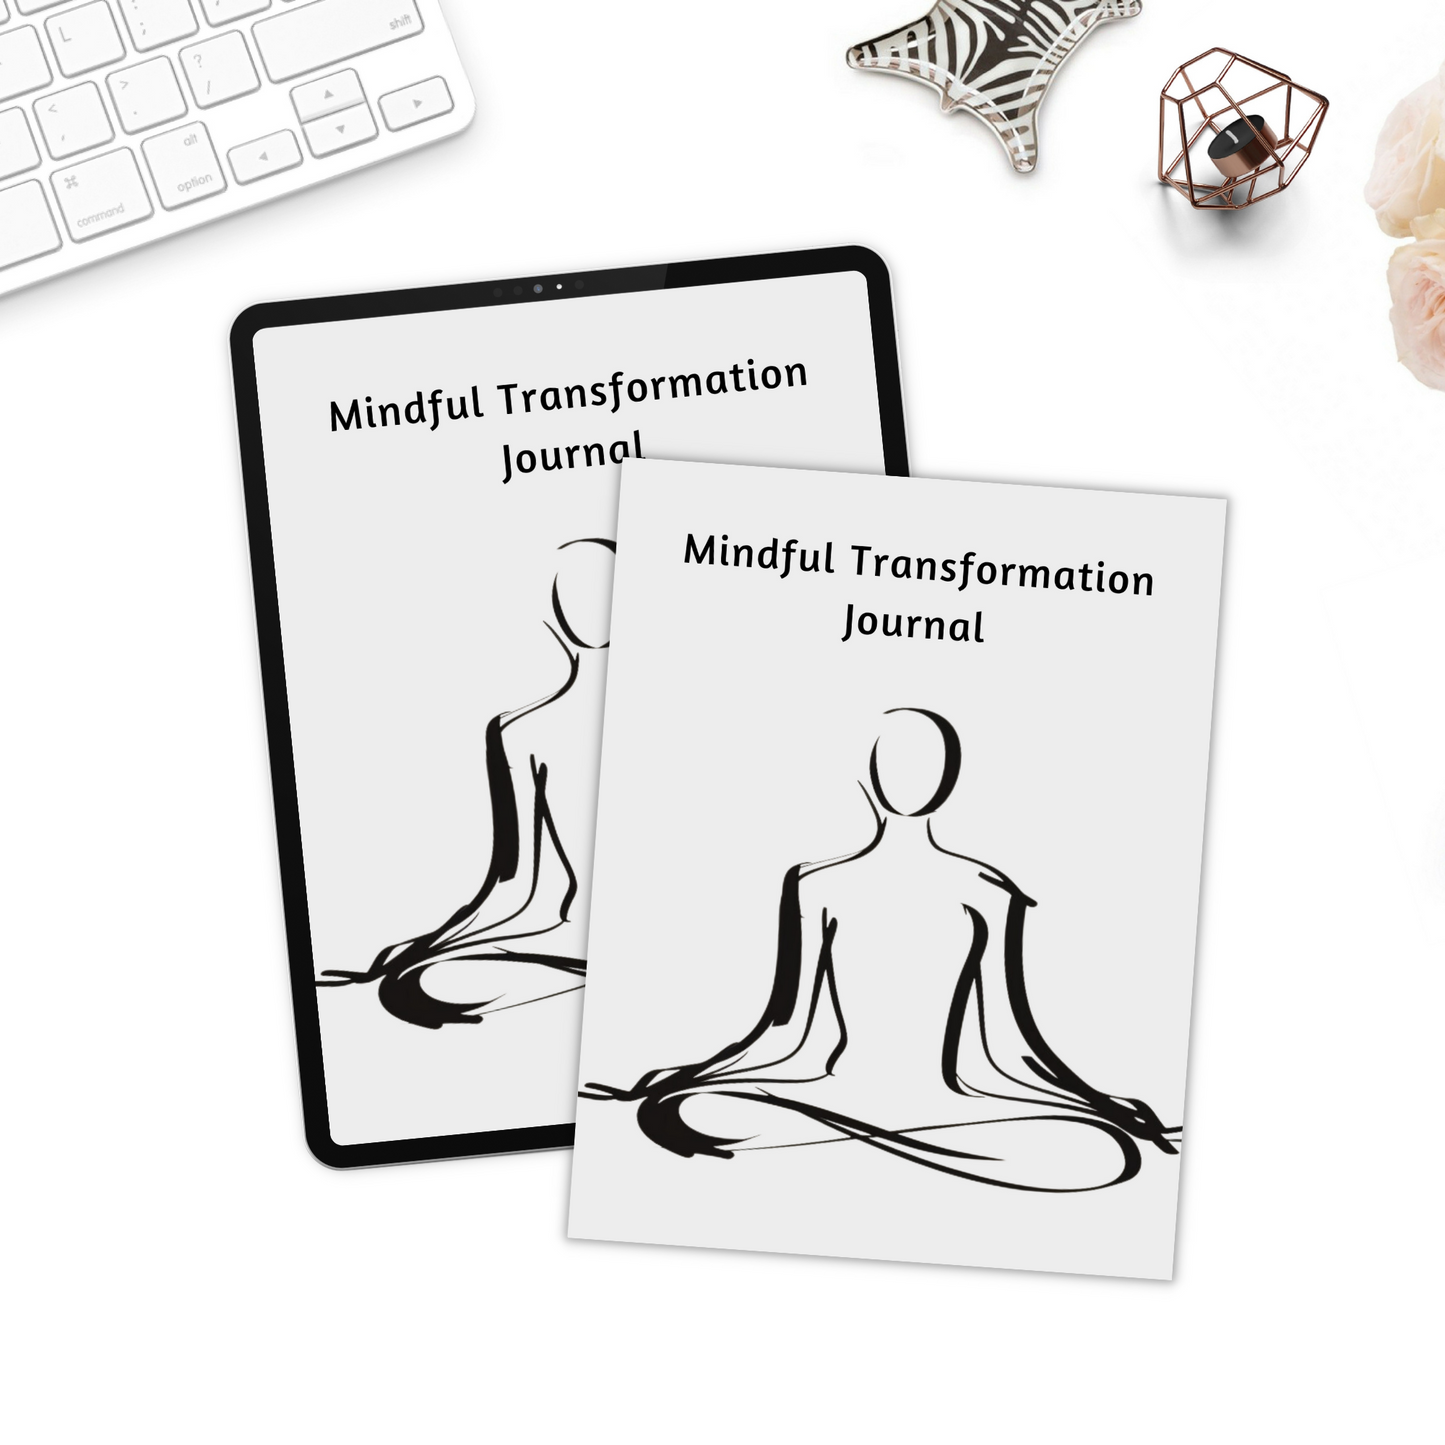 Mindful Journal for Digital Download - Also Printable - Instant Download - PDF